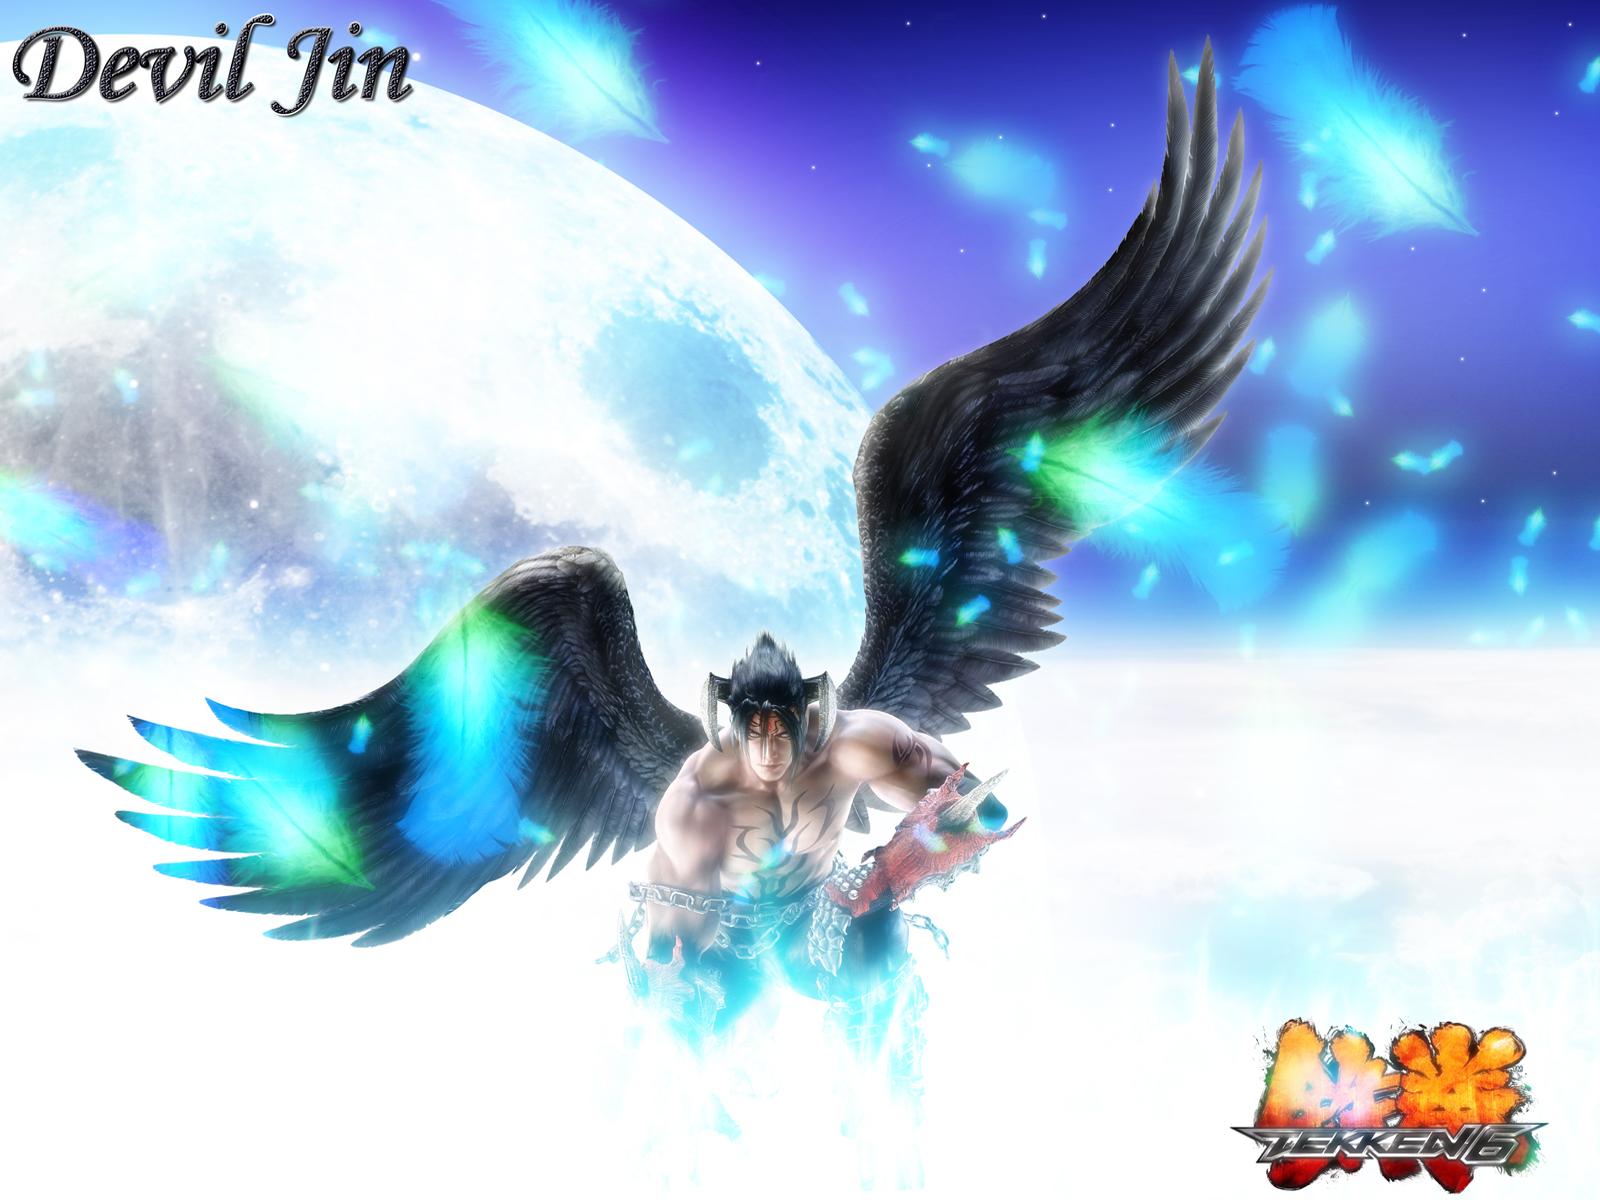 Download the Flying Devil Jin Wallpaper, Flying Devil Jin iPhone